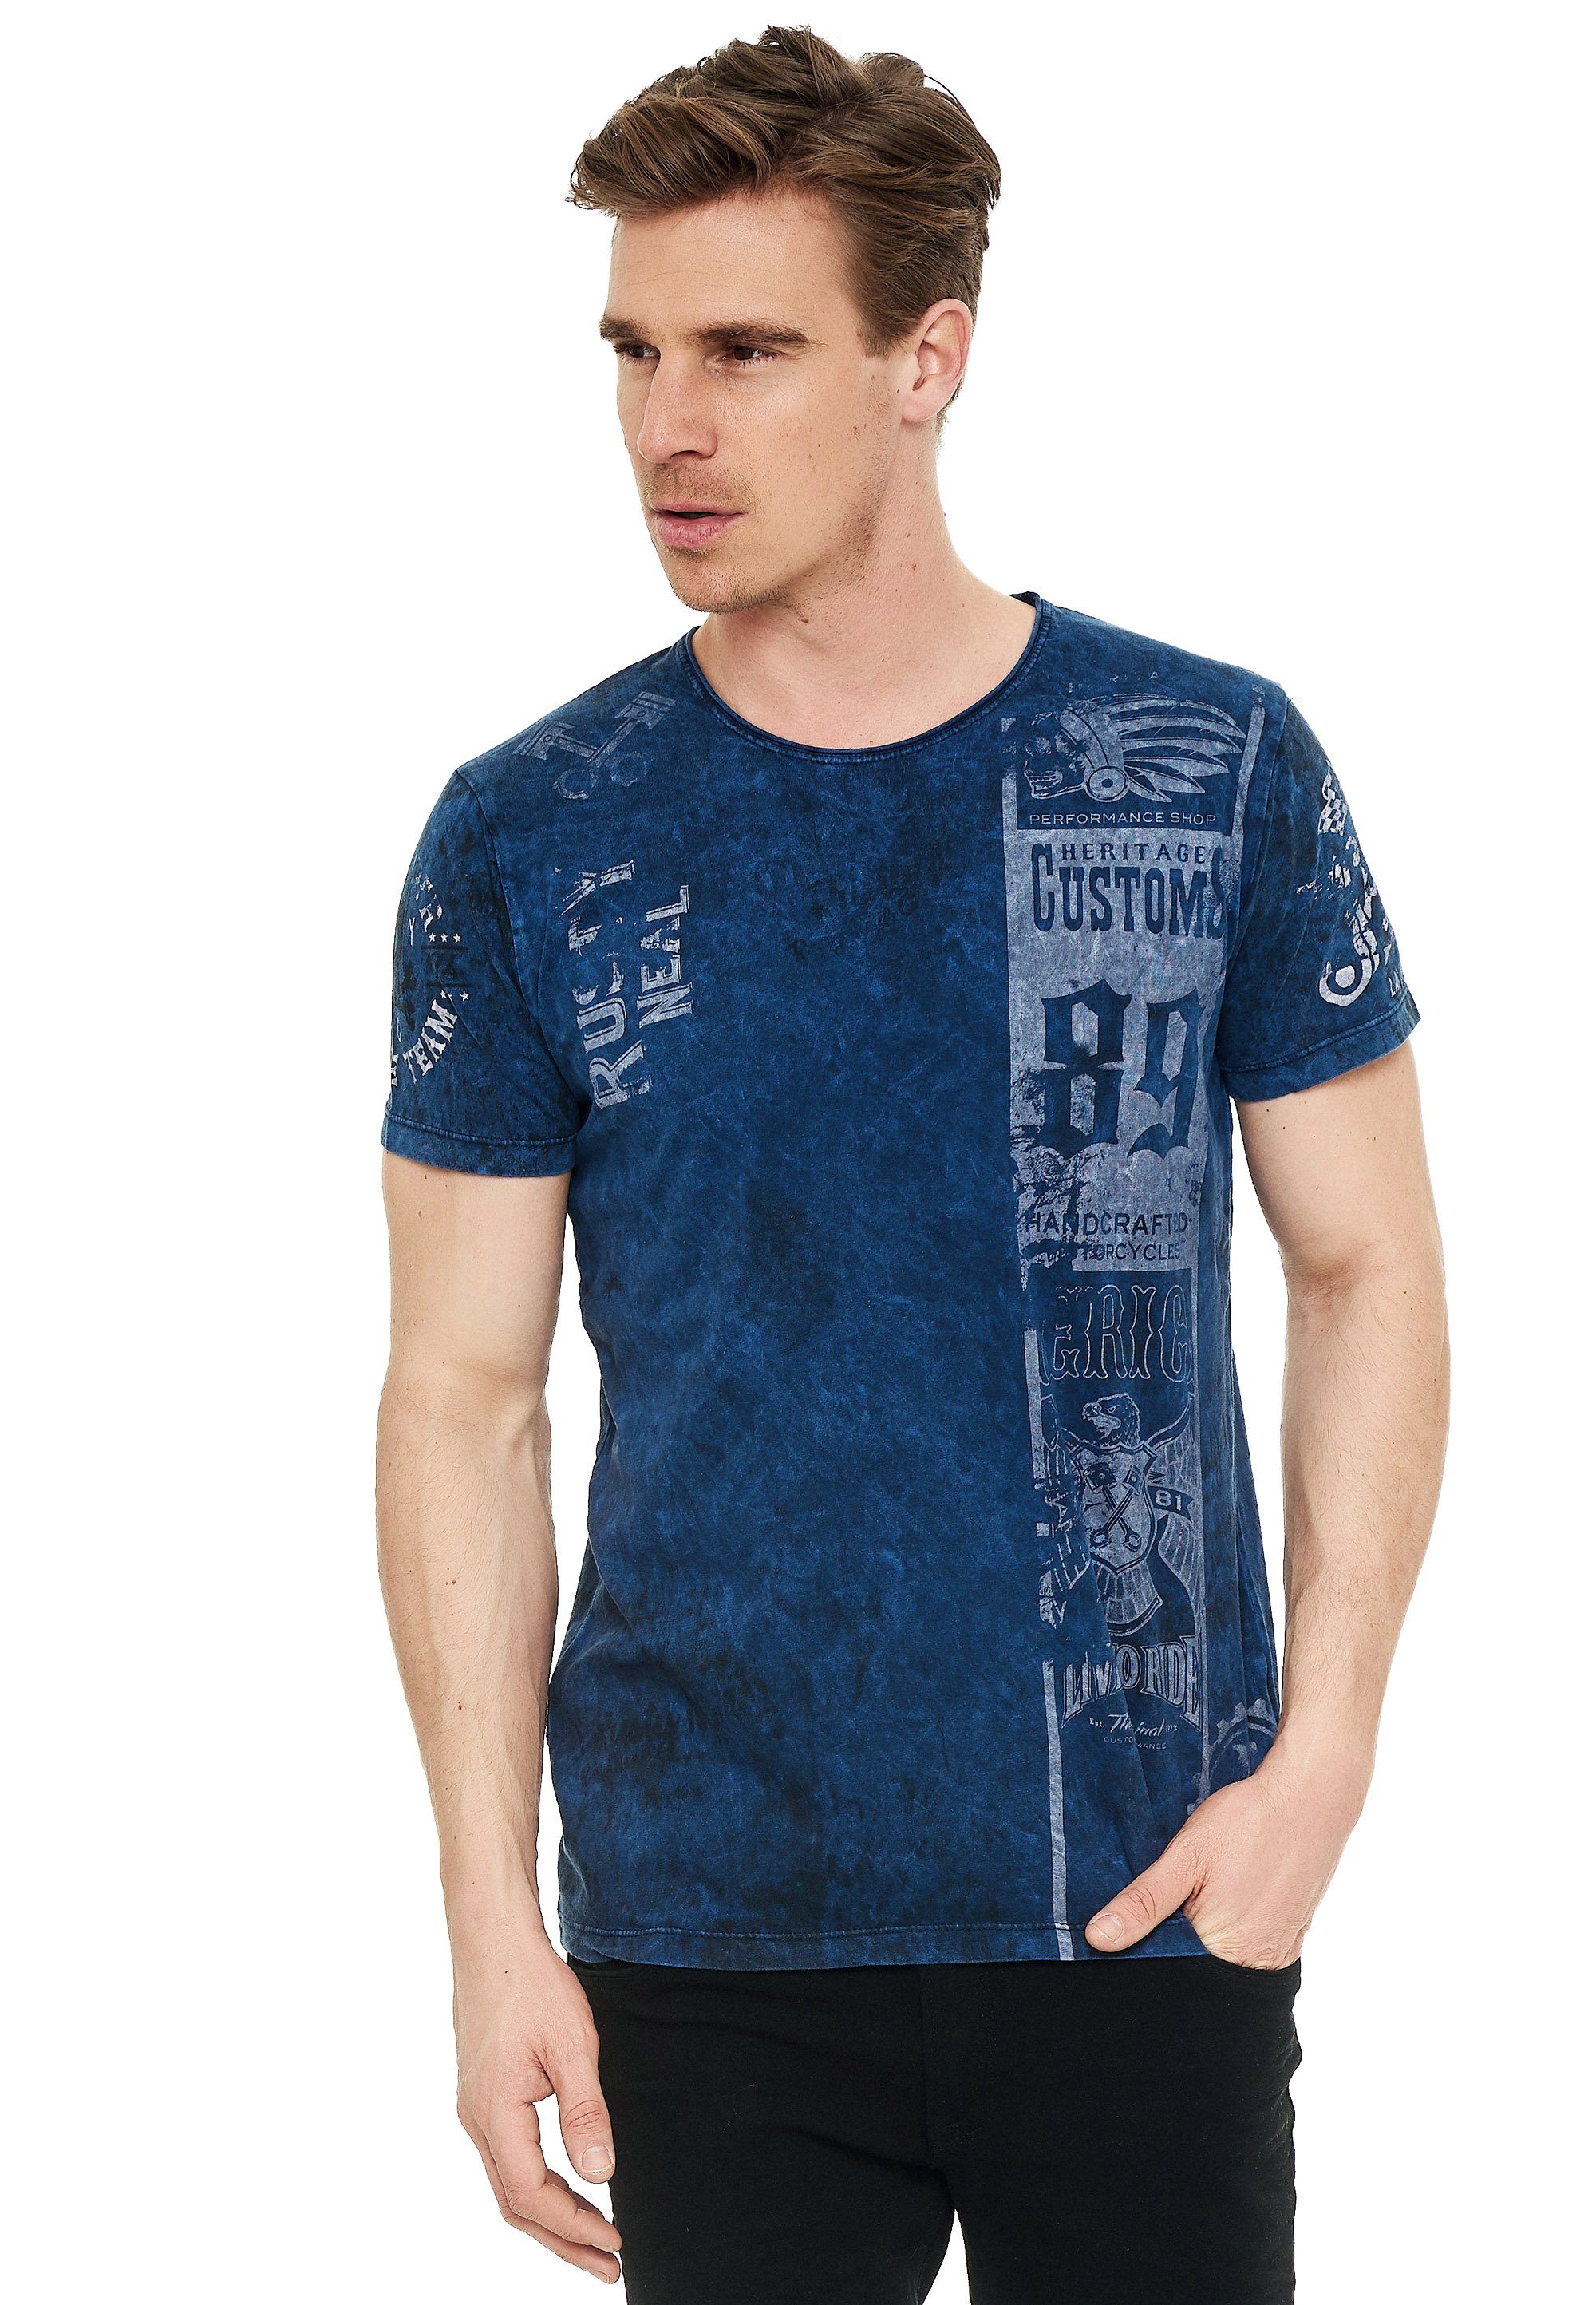 Rusty Neal T-Shirt mit modernem Print dunkelblau-weiß